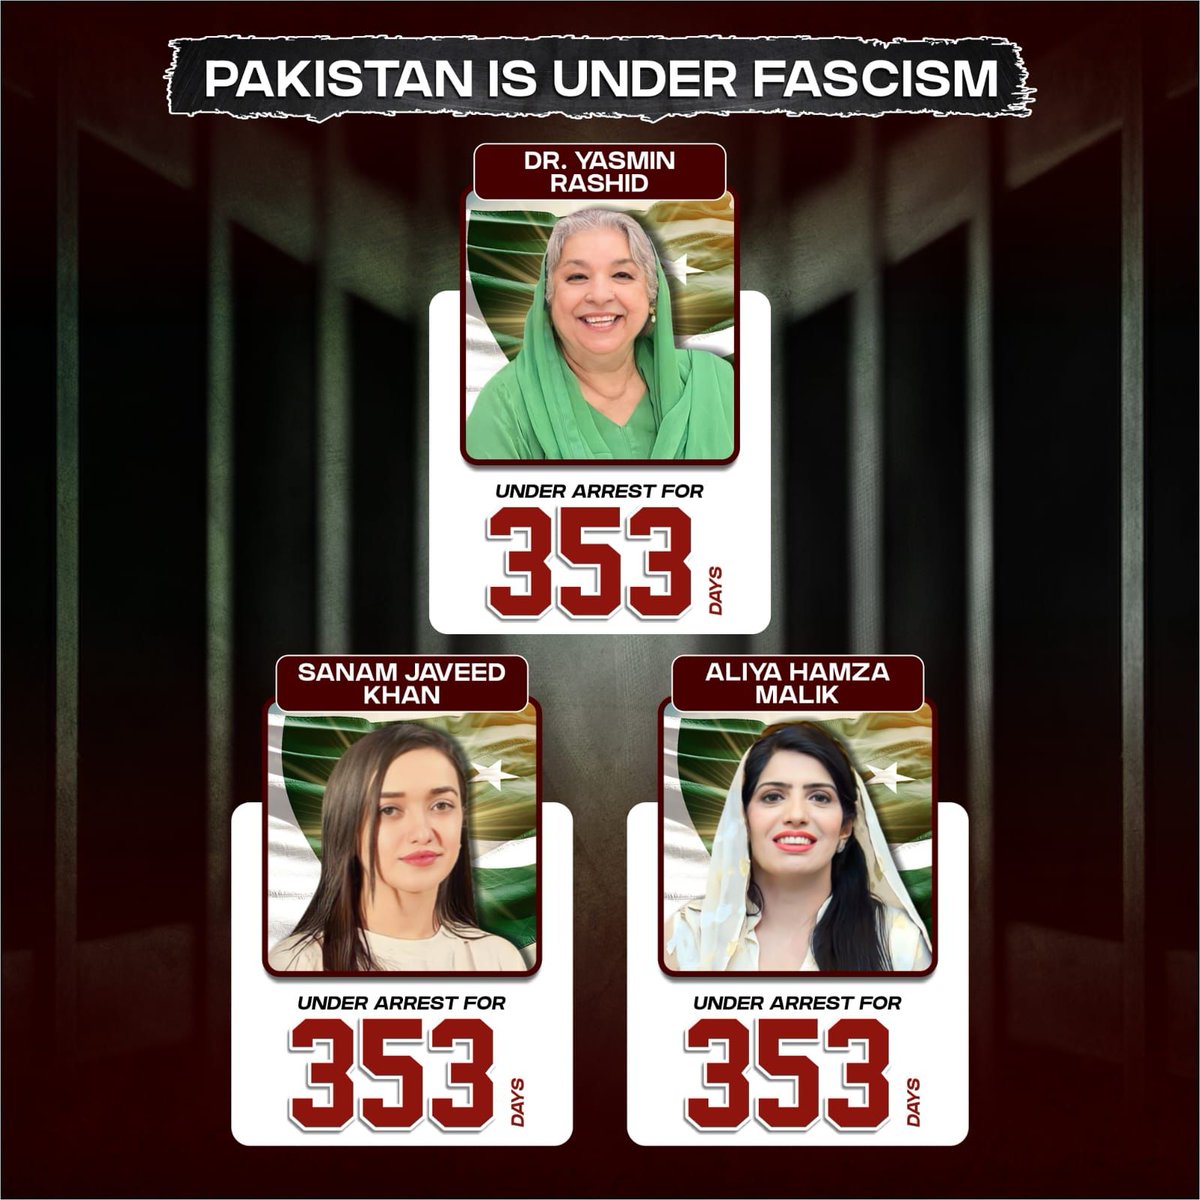 IRON LADIES

#ReleaseImranKhan
#ProtestOnFriday